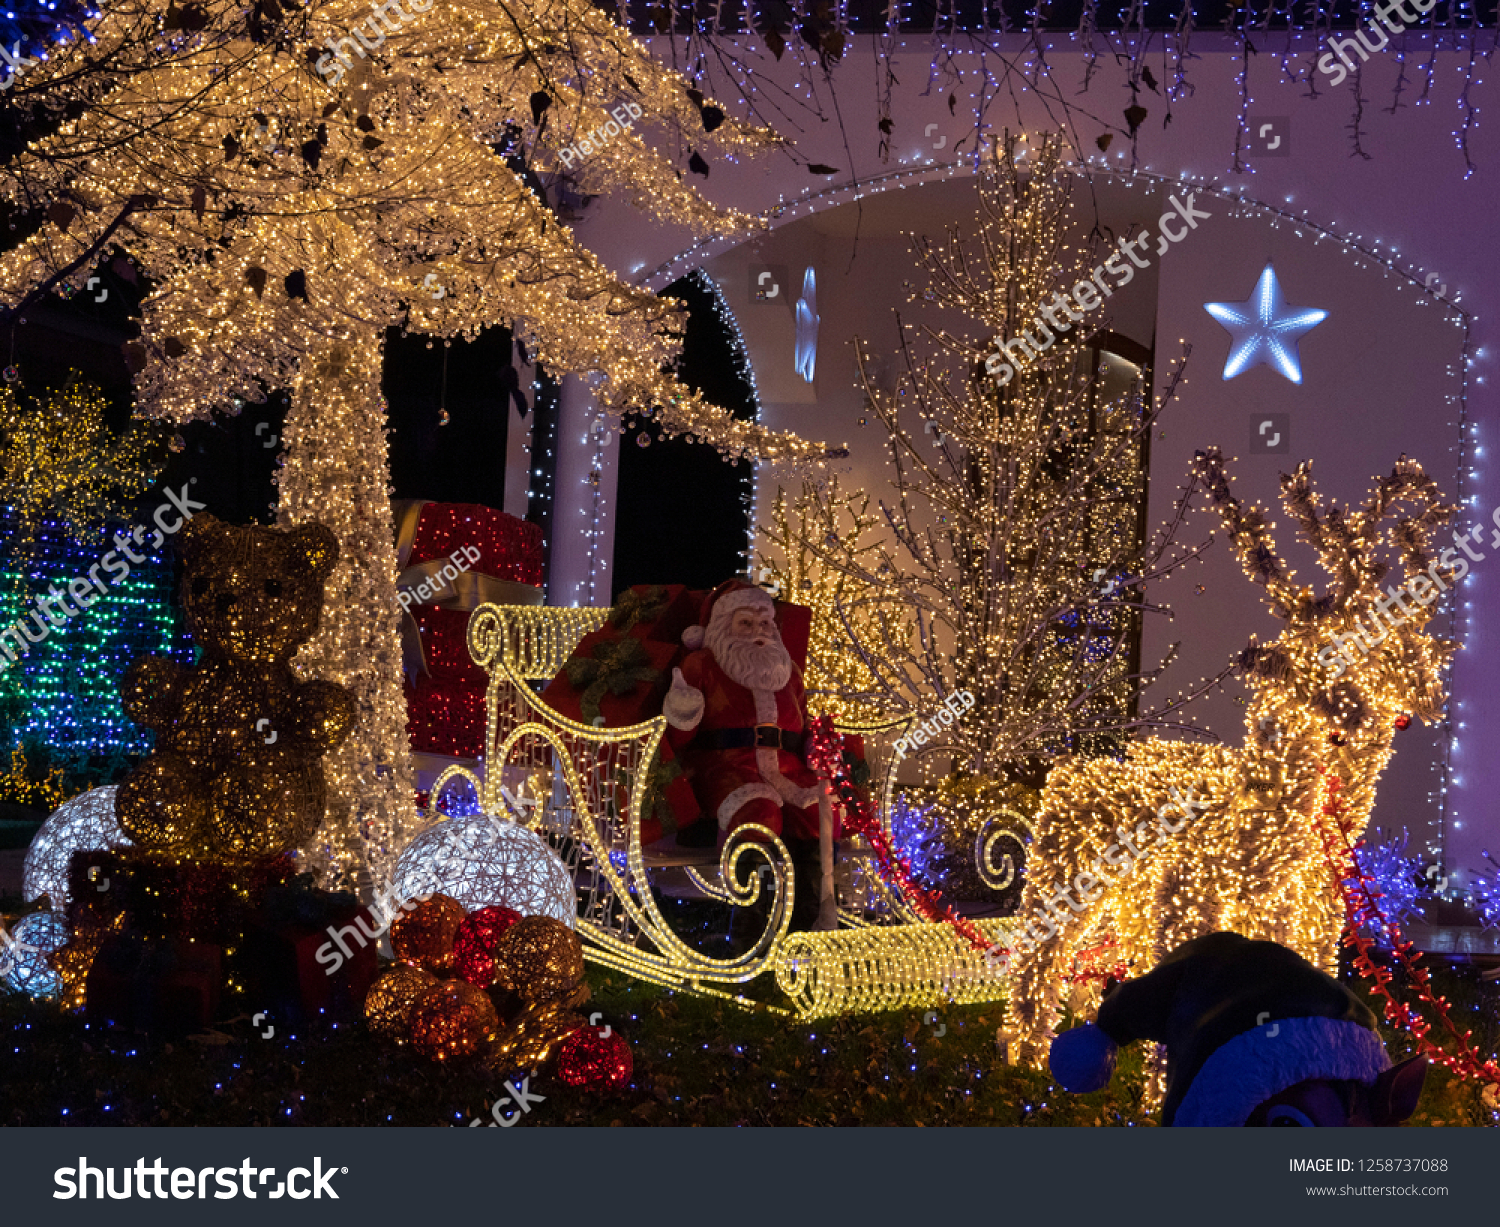 Santa Claus Casa Di Babbo Natale.Melegnano Italy 12 15 2018 Santa Stock Photo Edit Now 1258737088